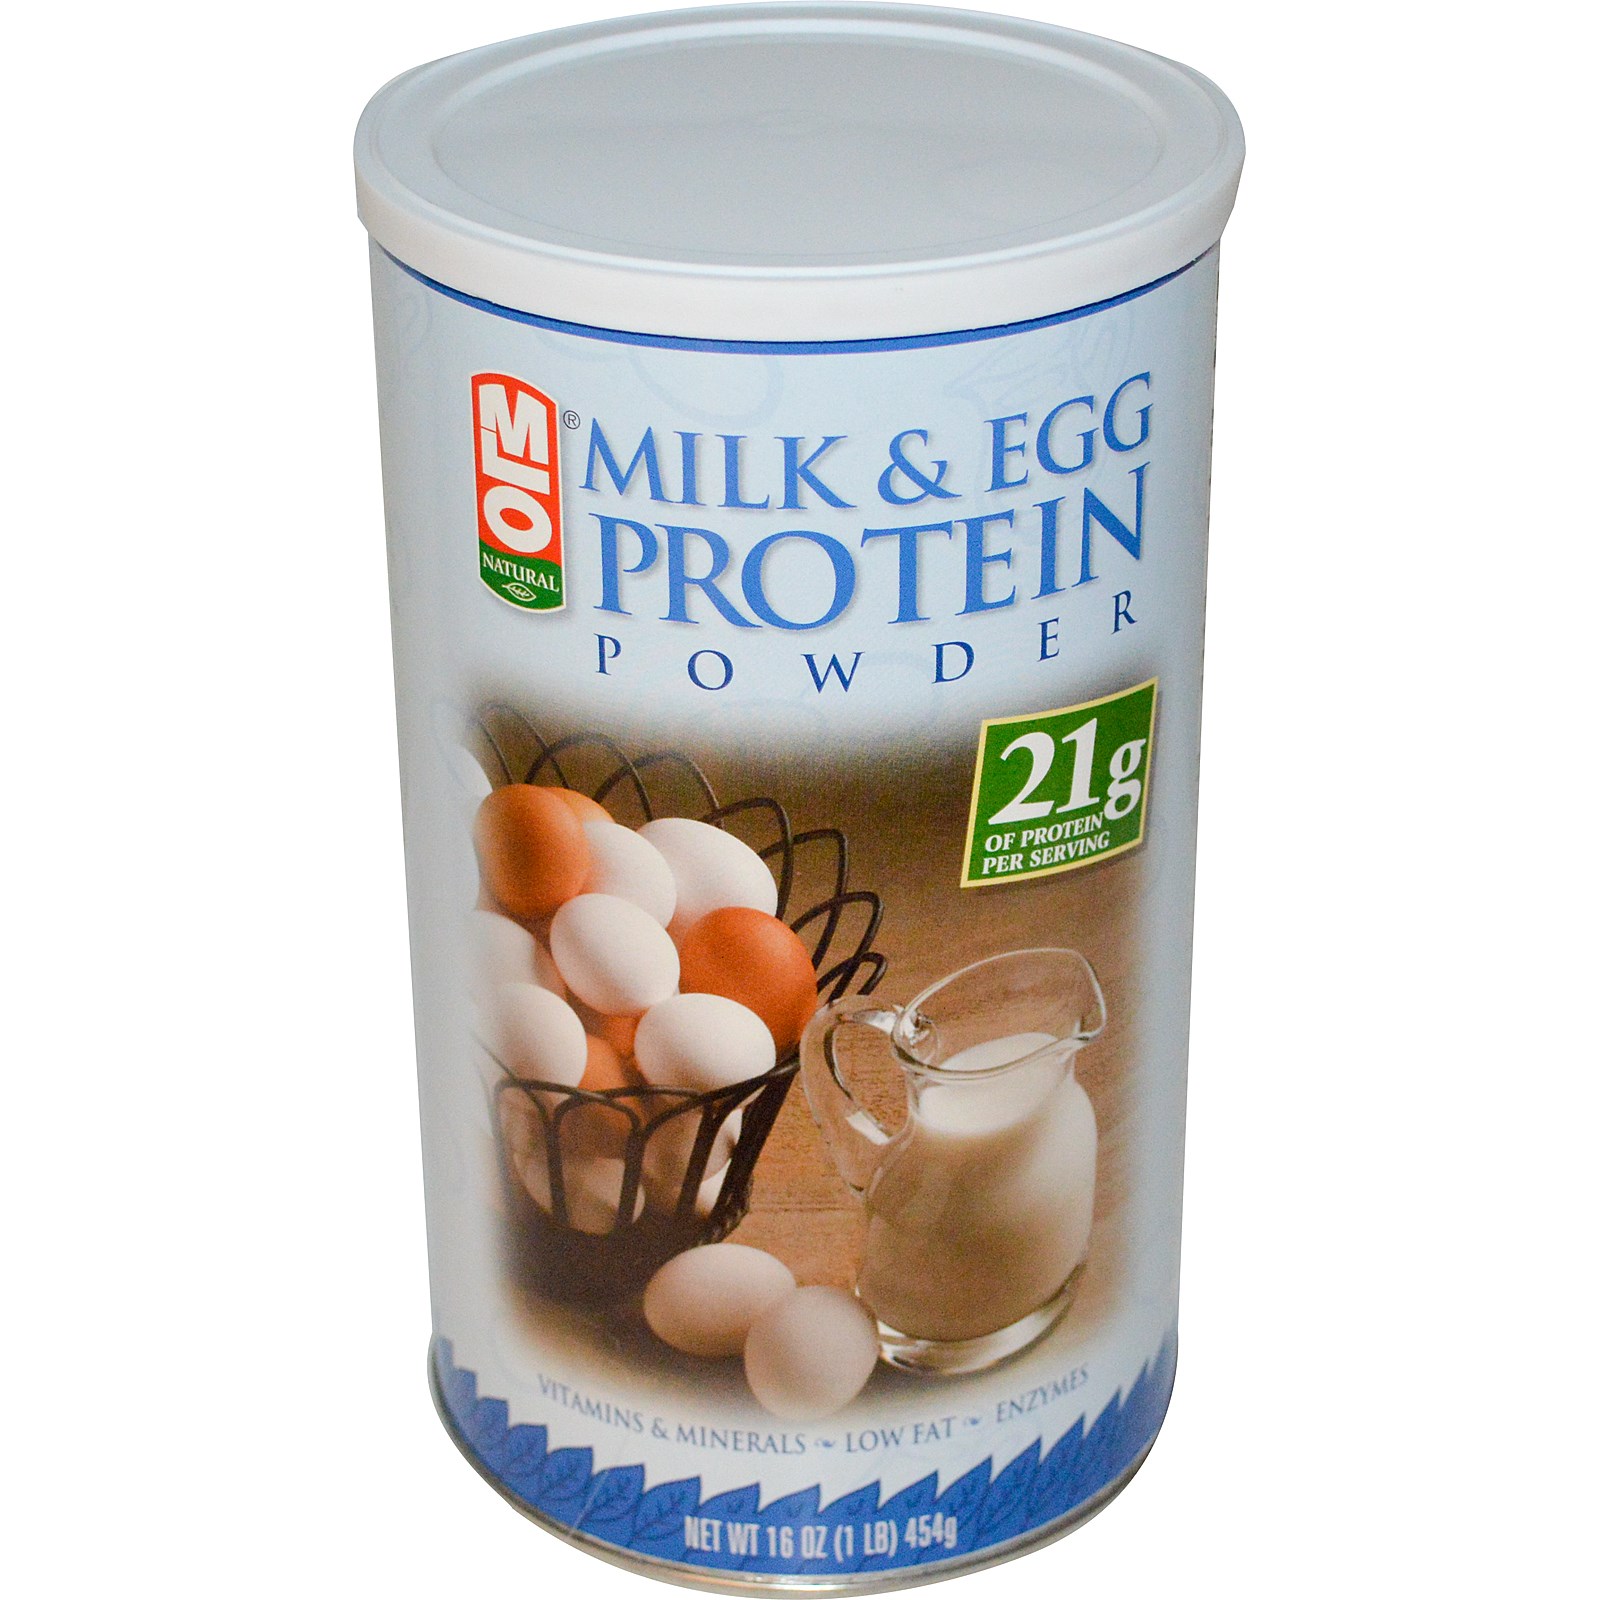 Протеин 16. Яичный протеин. Белок питьевой. Питьевой белок в аптеке. Питьевой яичный белок.